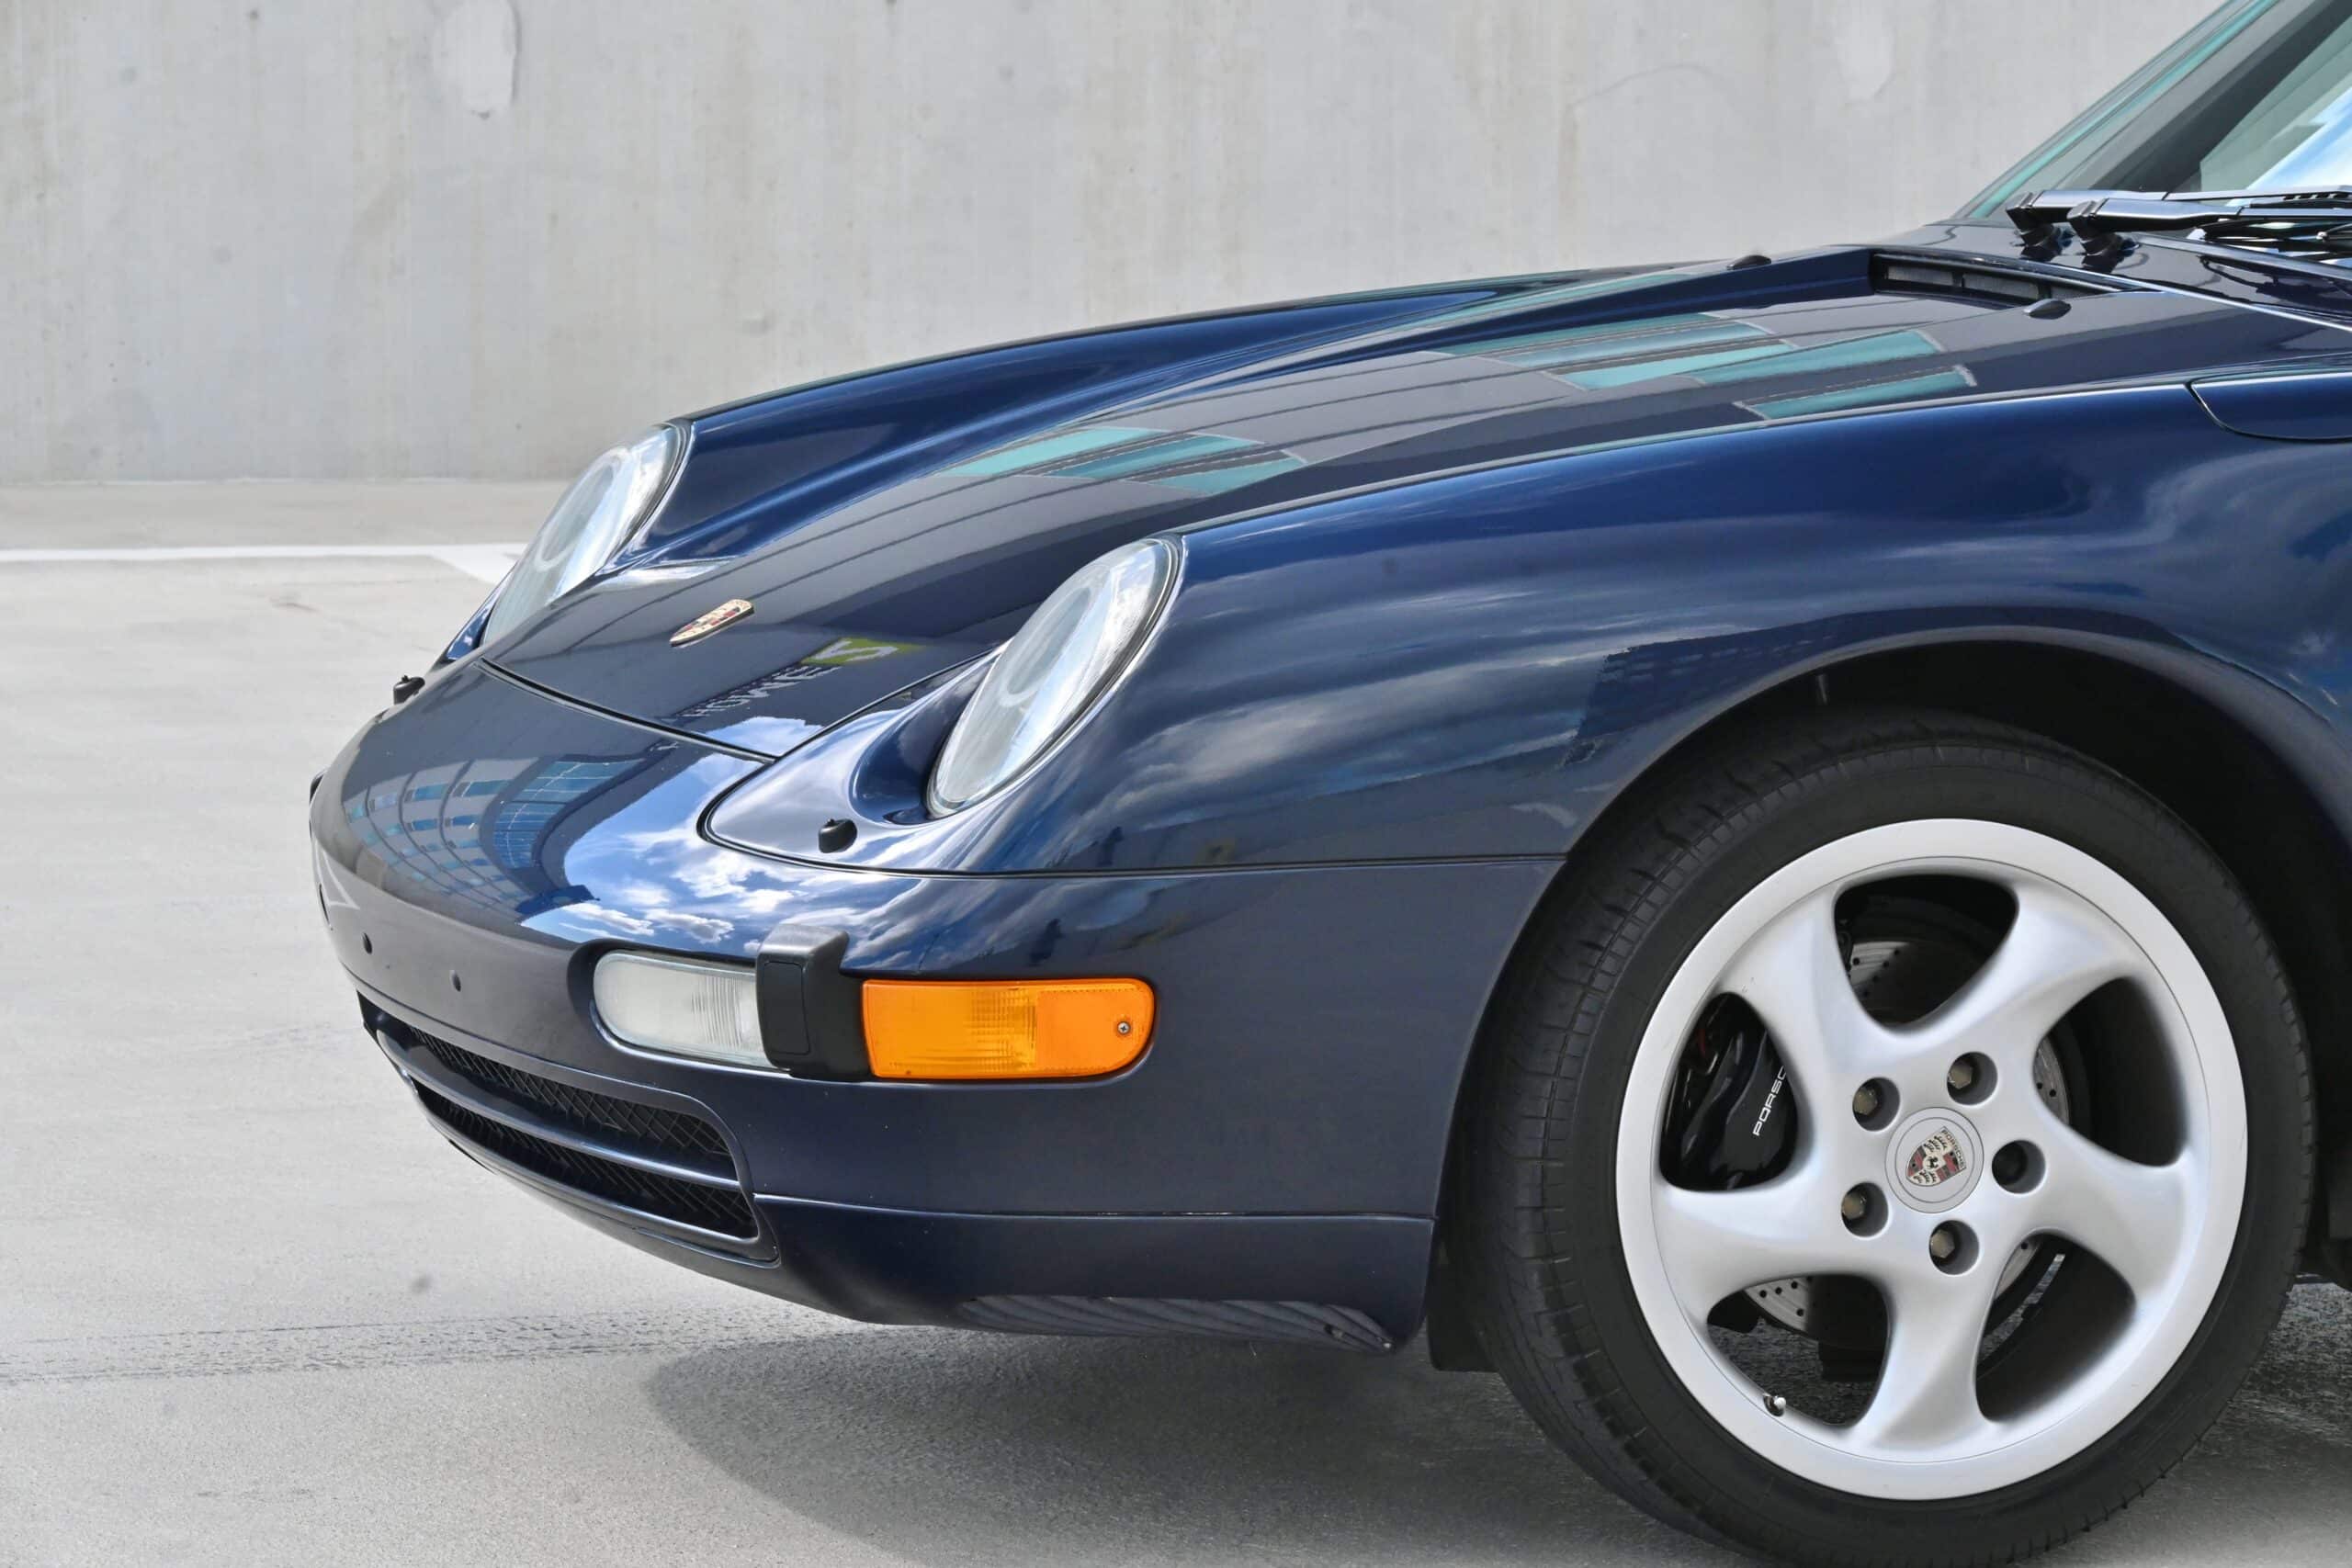 1997 Porsche 911 993 Carrera California Car – Only 37K Documented Actual Miles – Original Oceanblue Paint